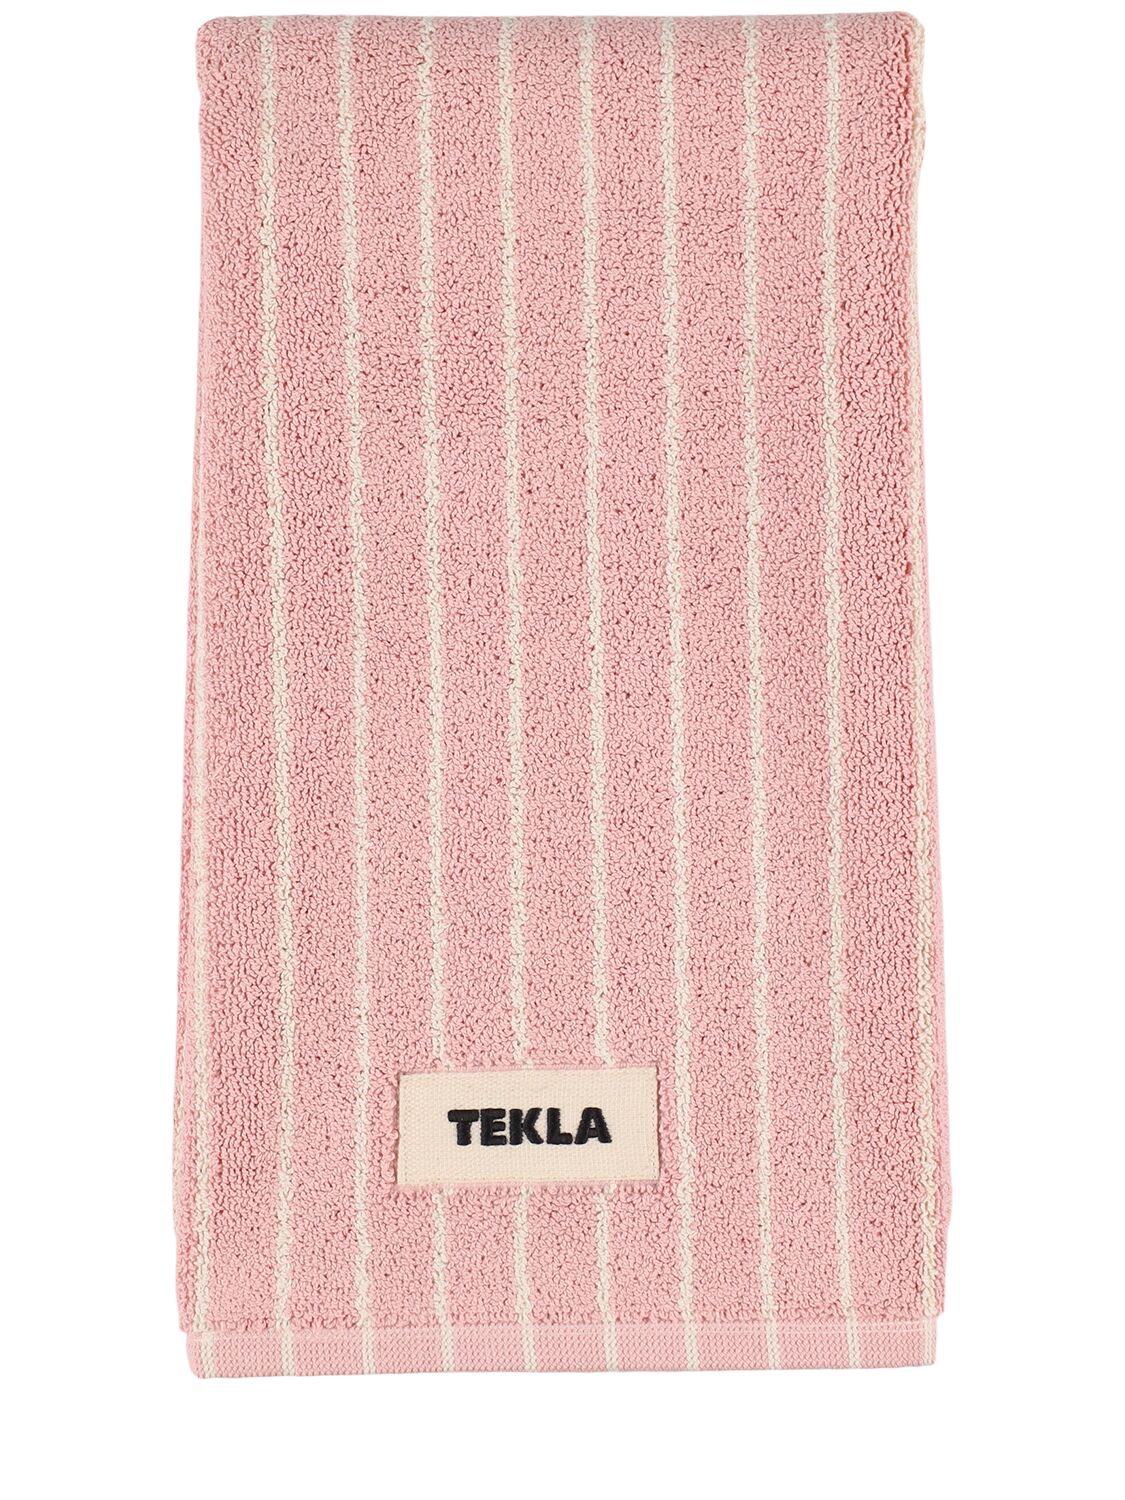 Tekla Shaded Pink Striped Bath Mat